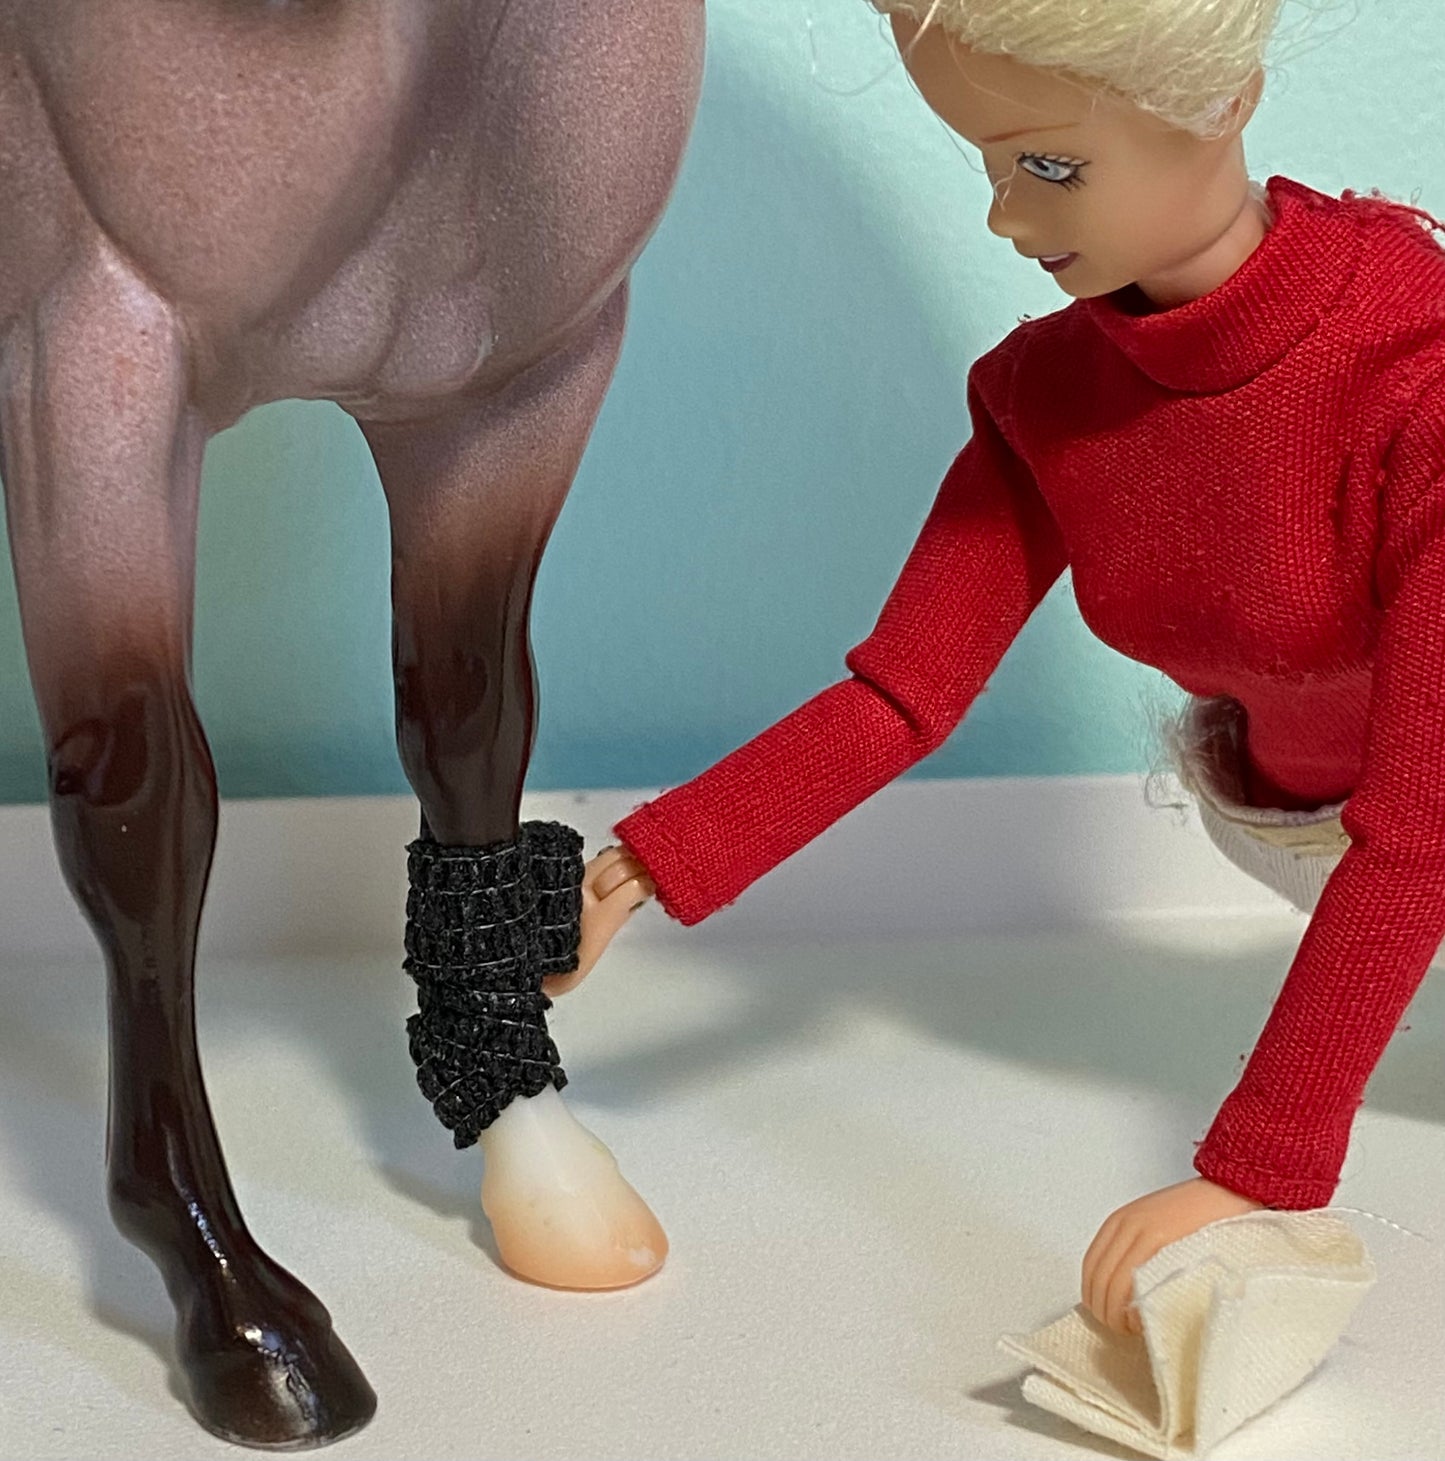 Breyer Model Horse First Aid Kit